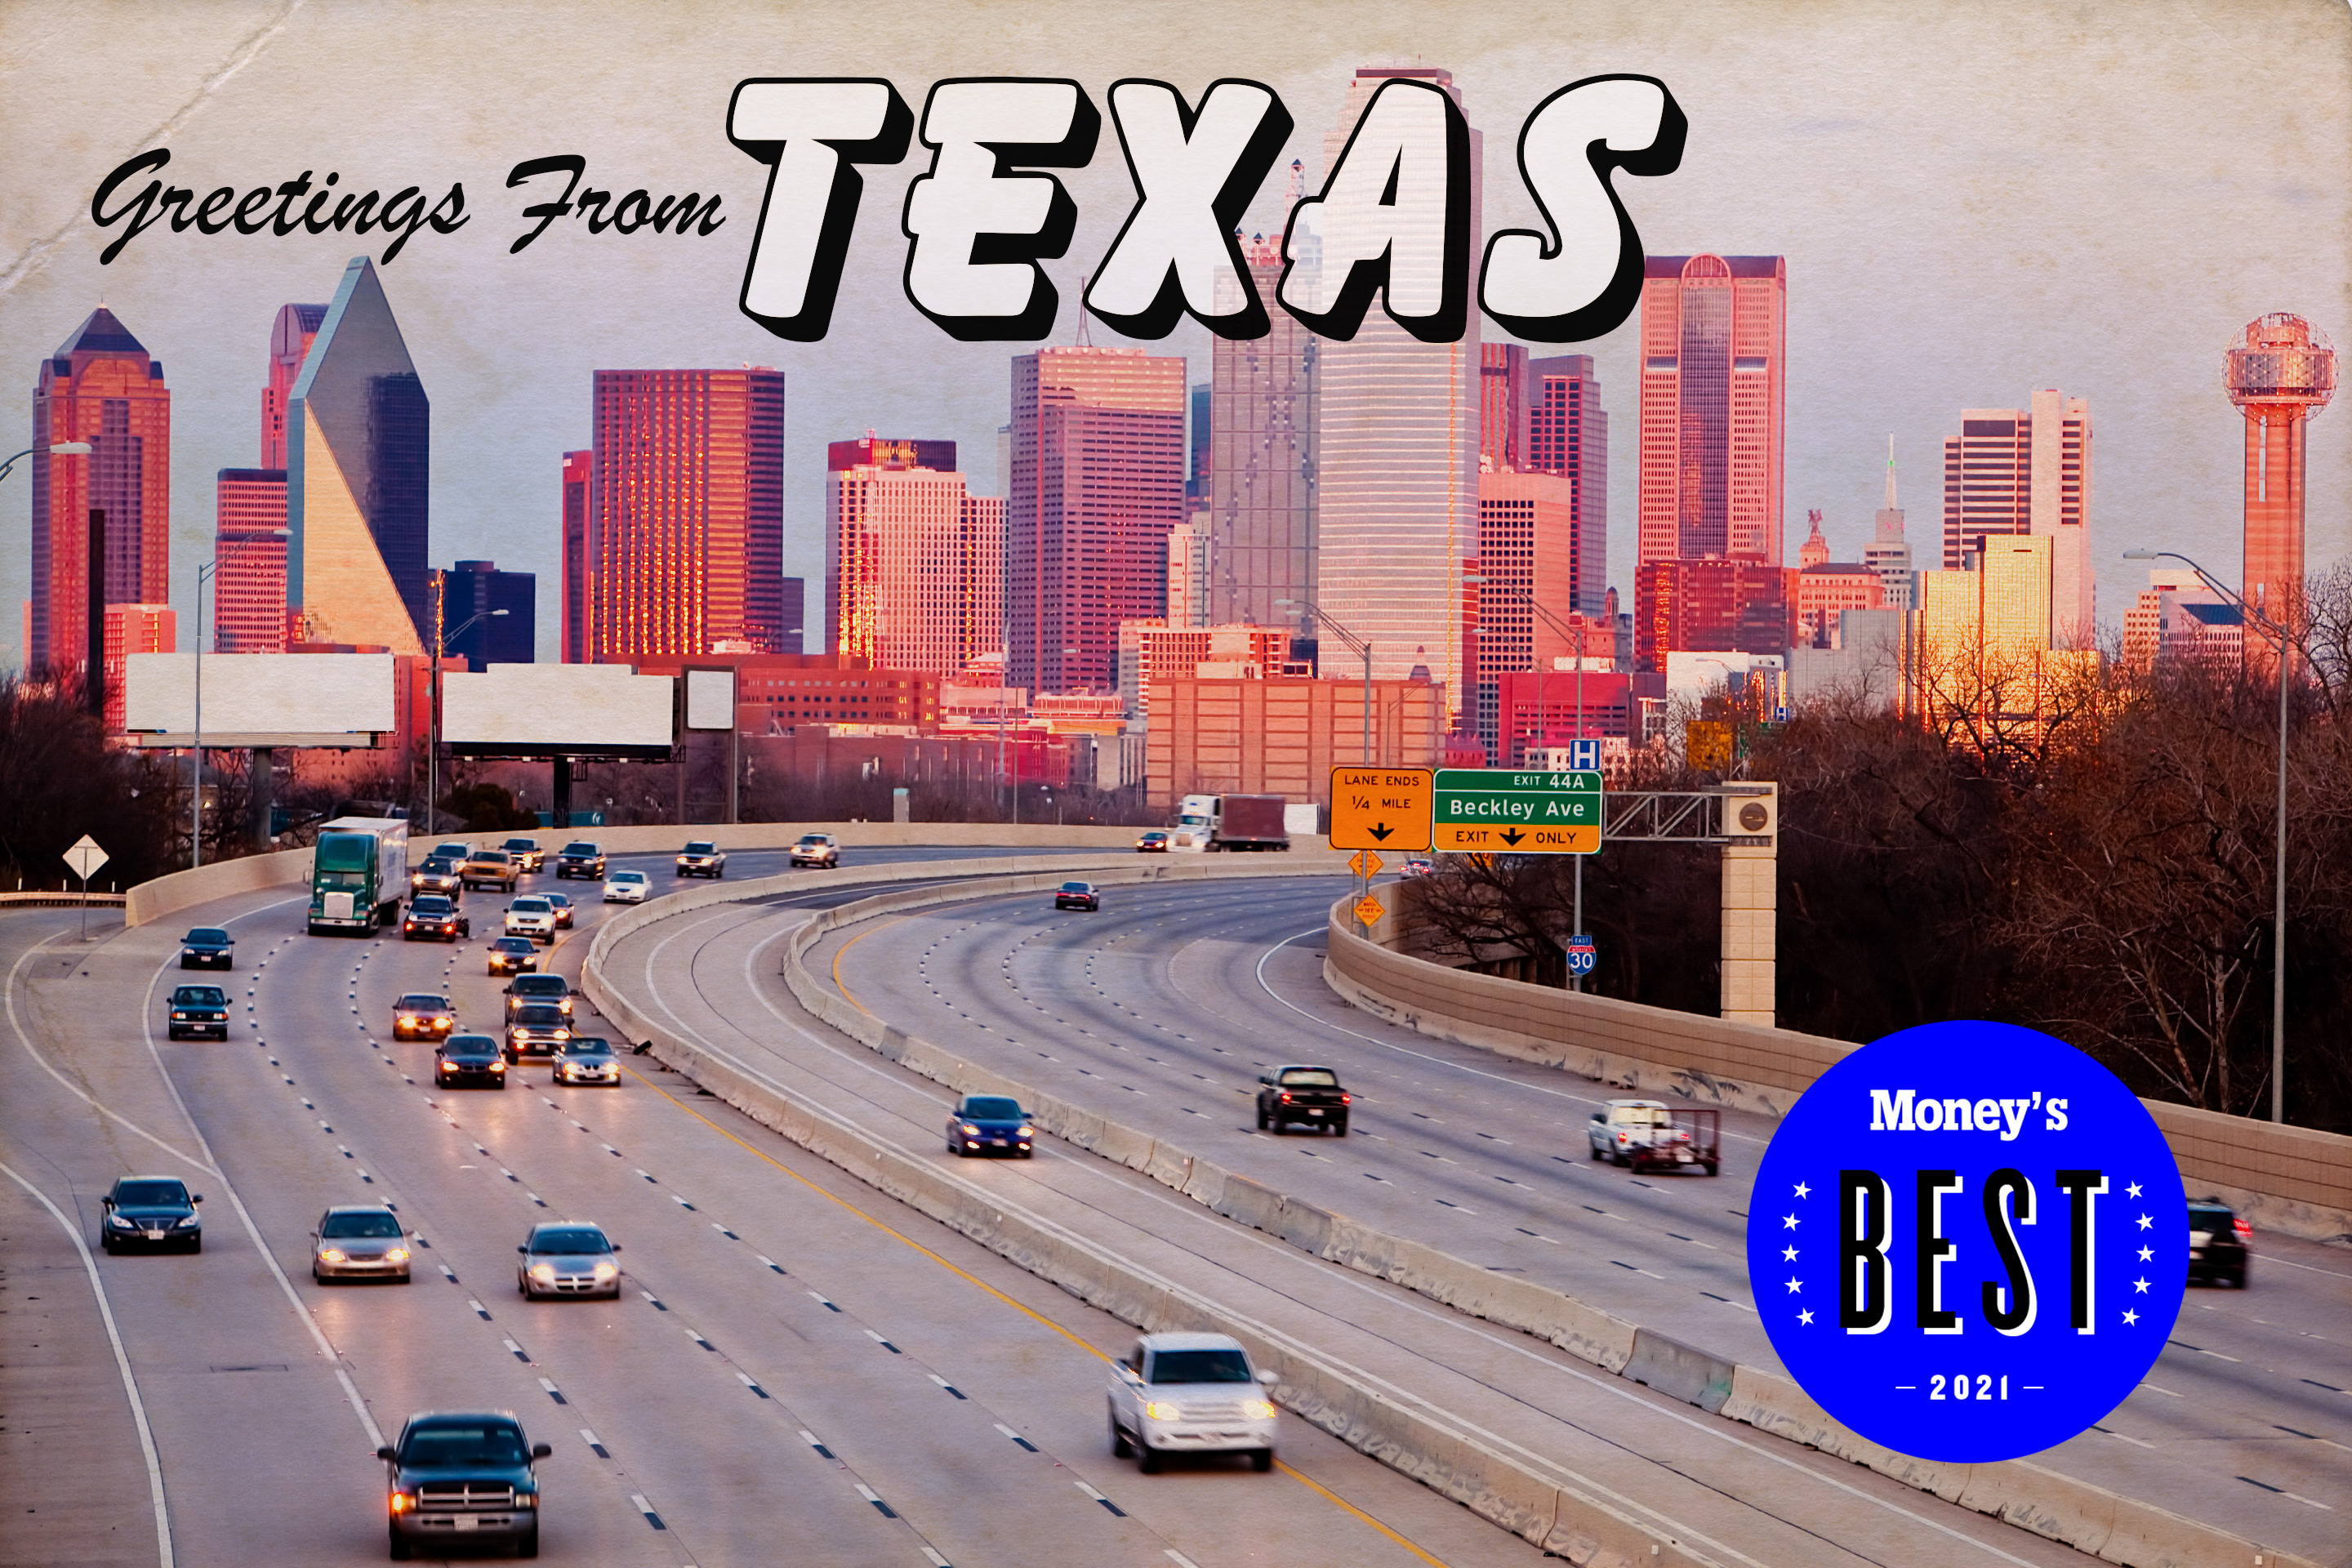 8 Best Car Insurance Companies in Texas